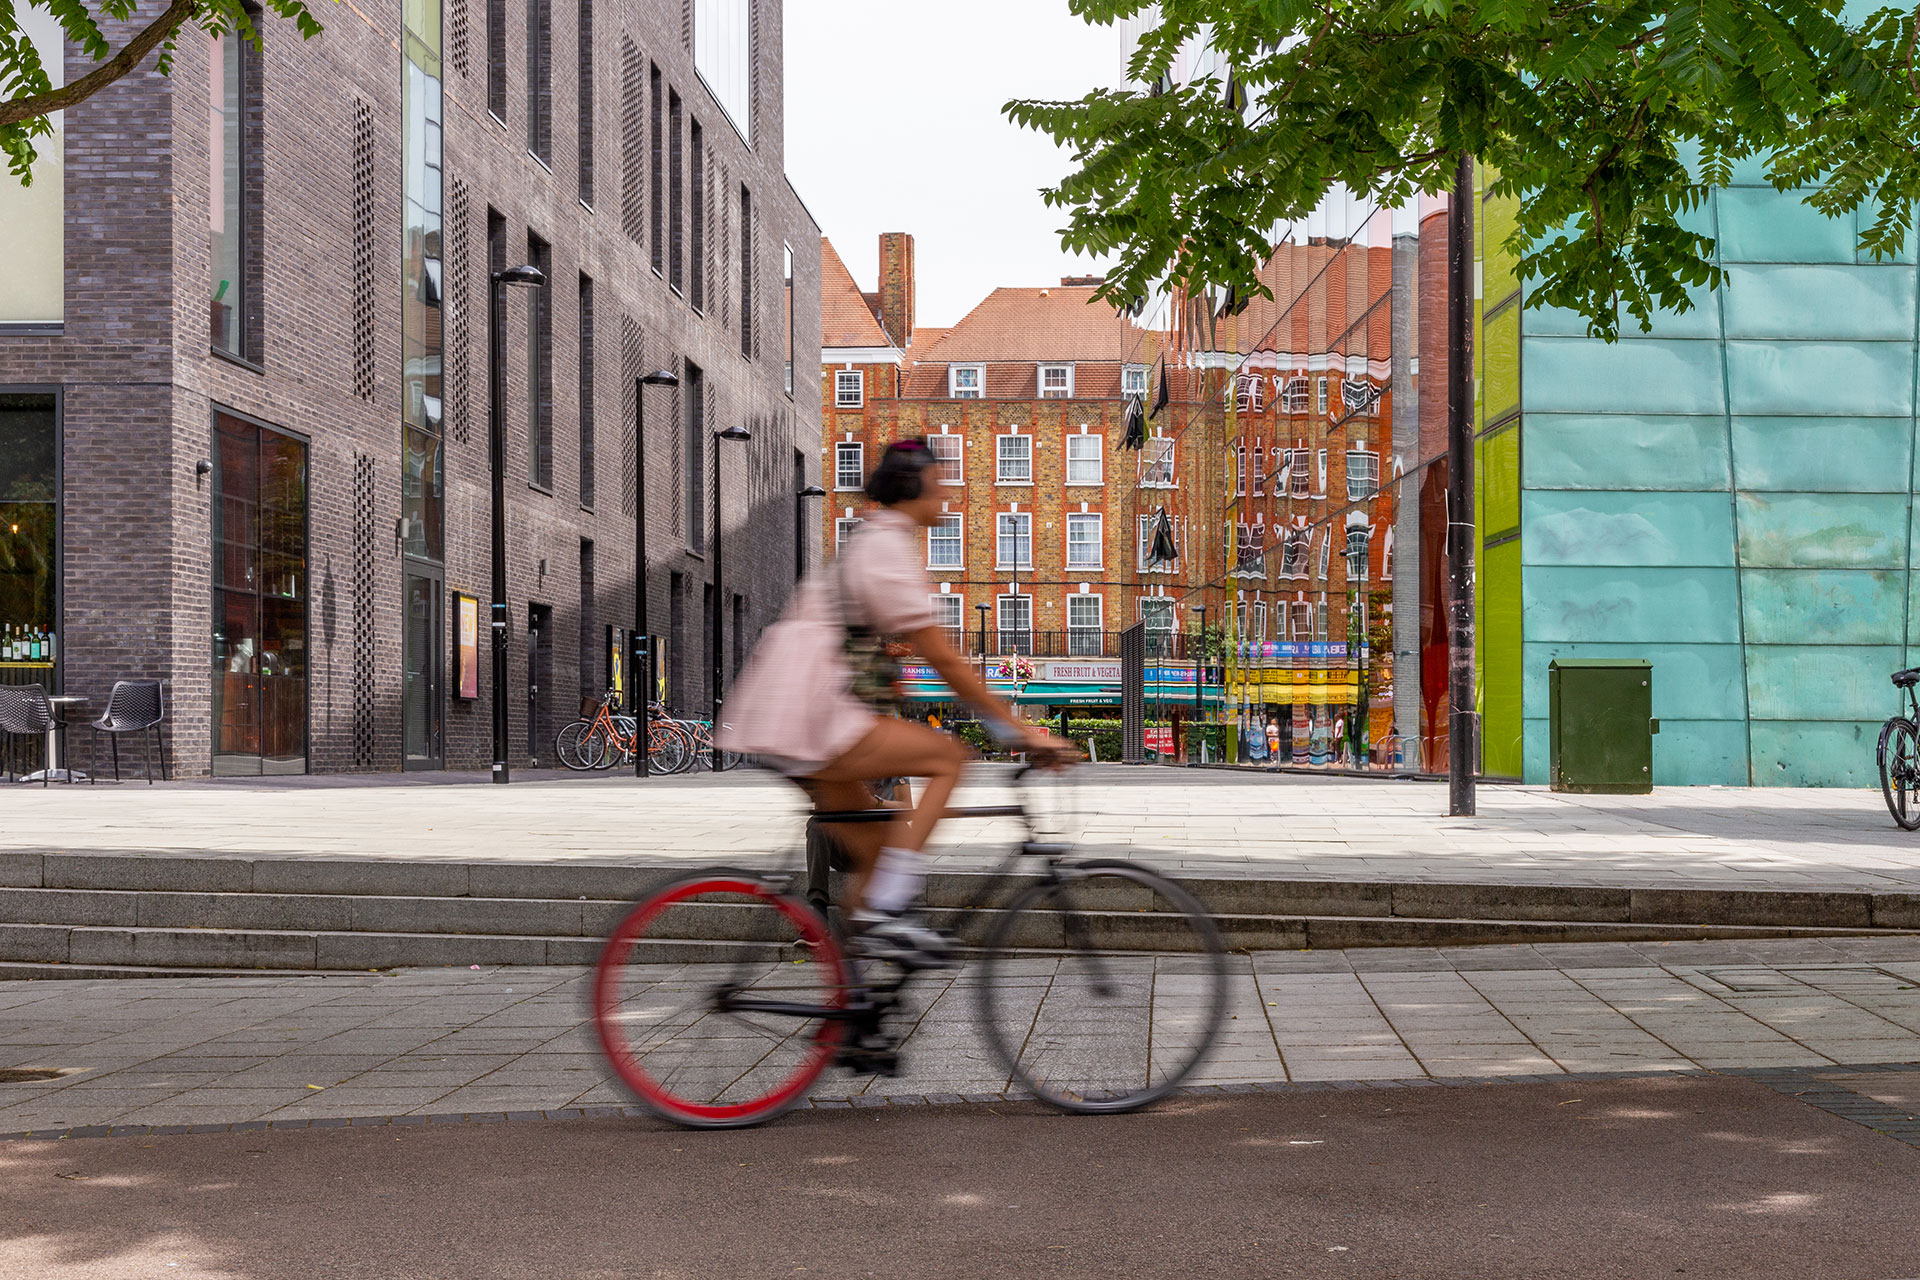 Cyclist on an urban road